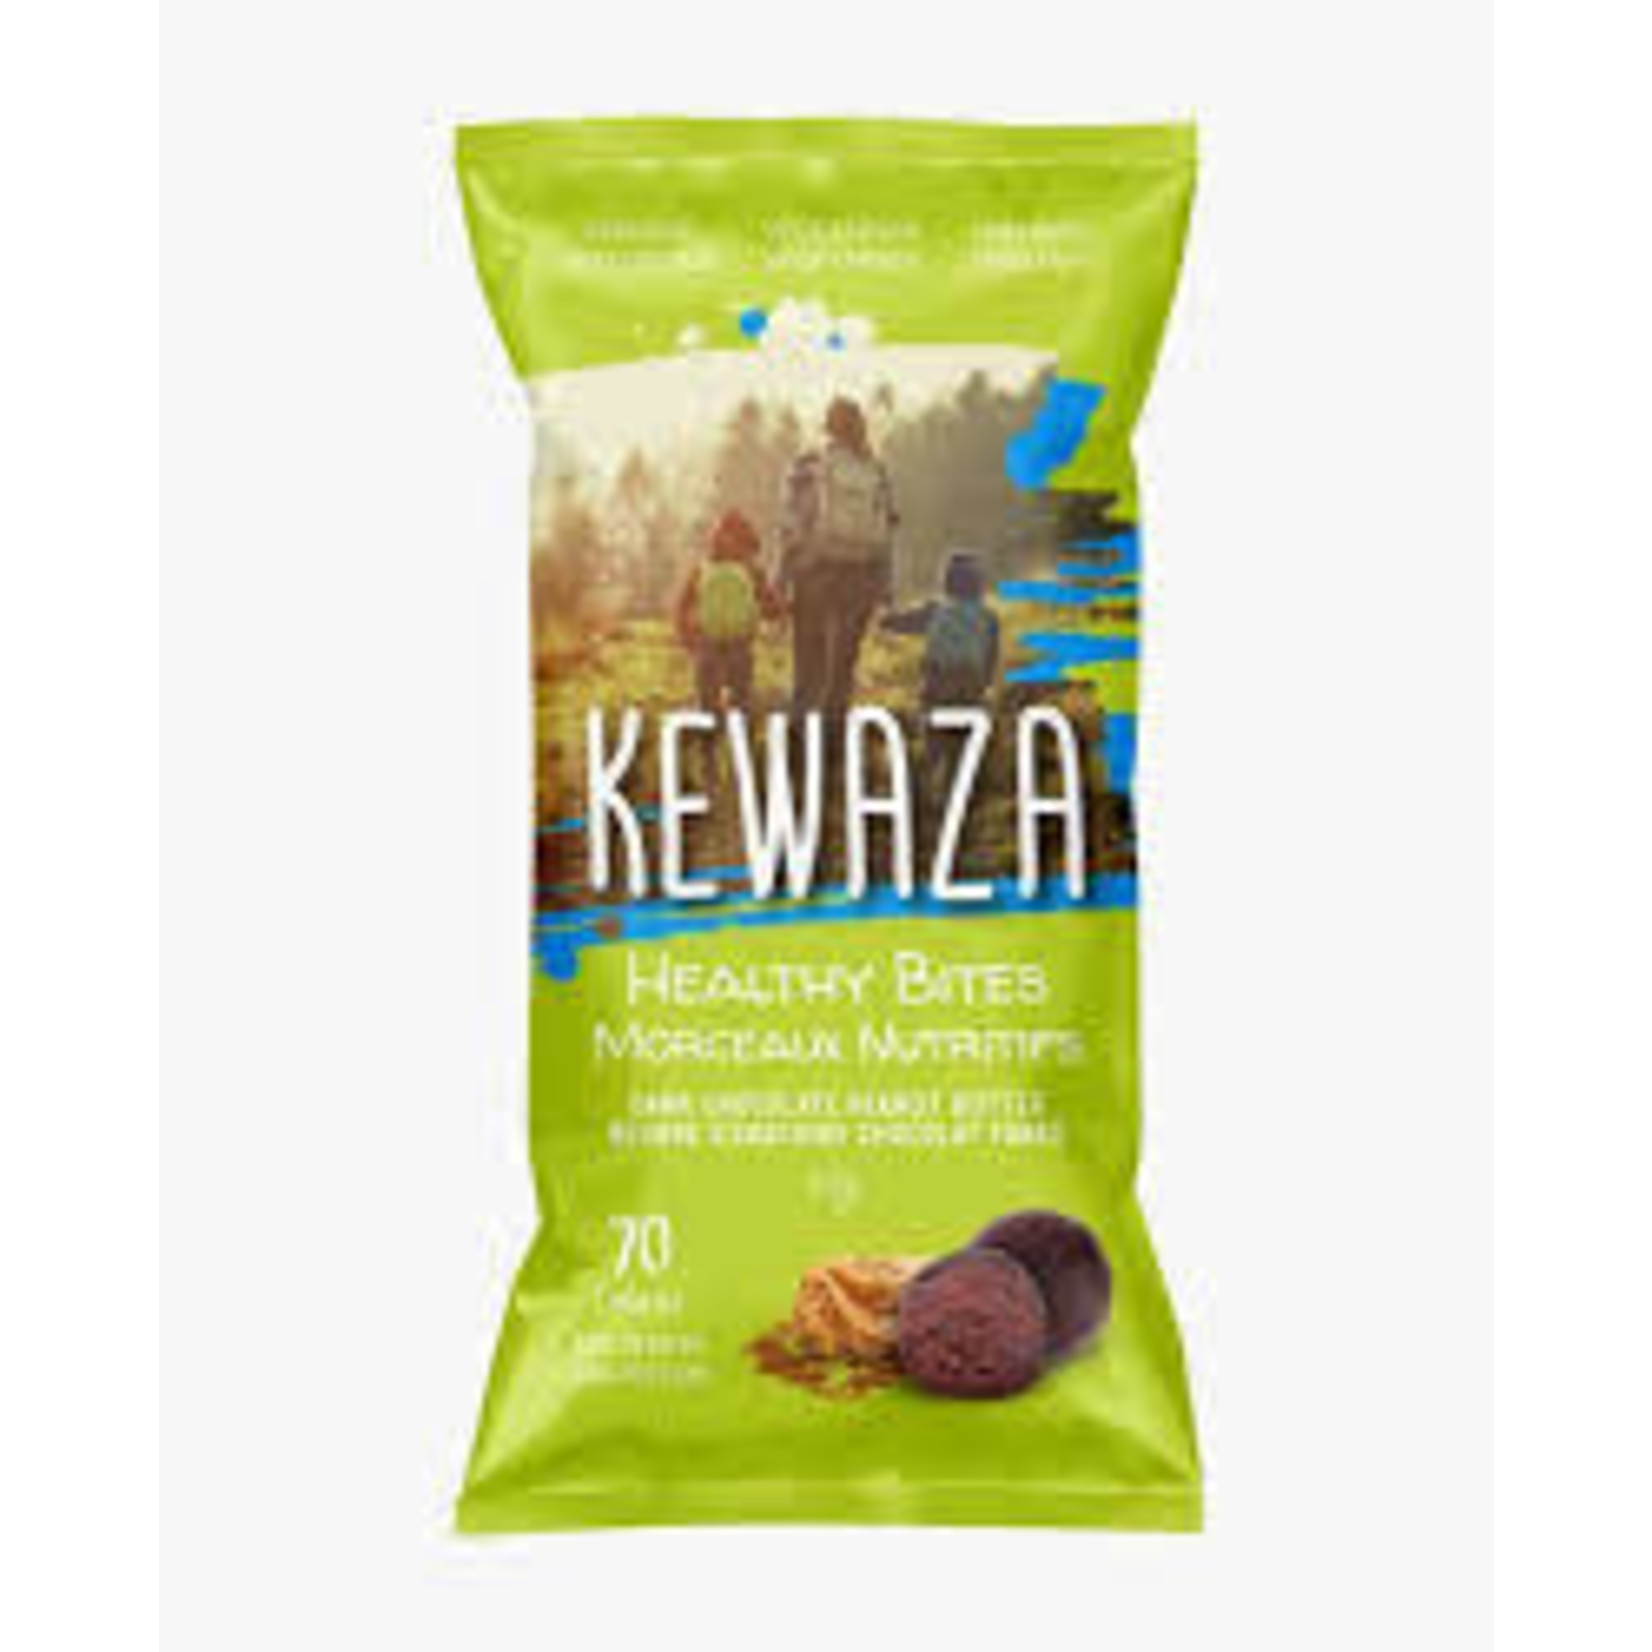 Kewaza Healthy Bites Dark Chocolate Peanut Butter